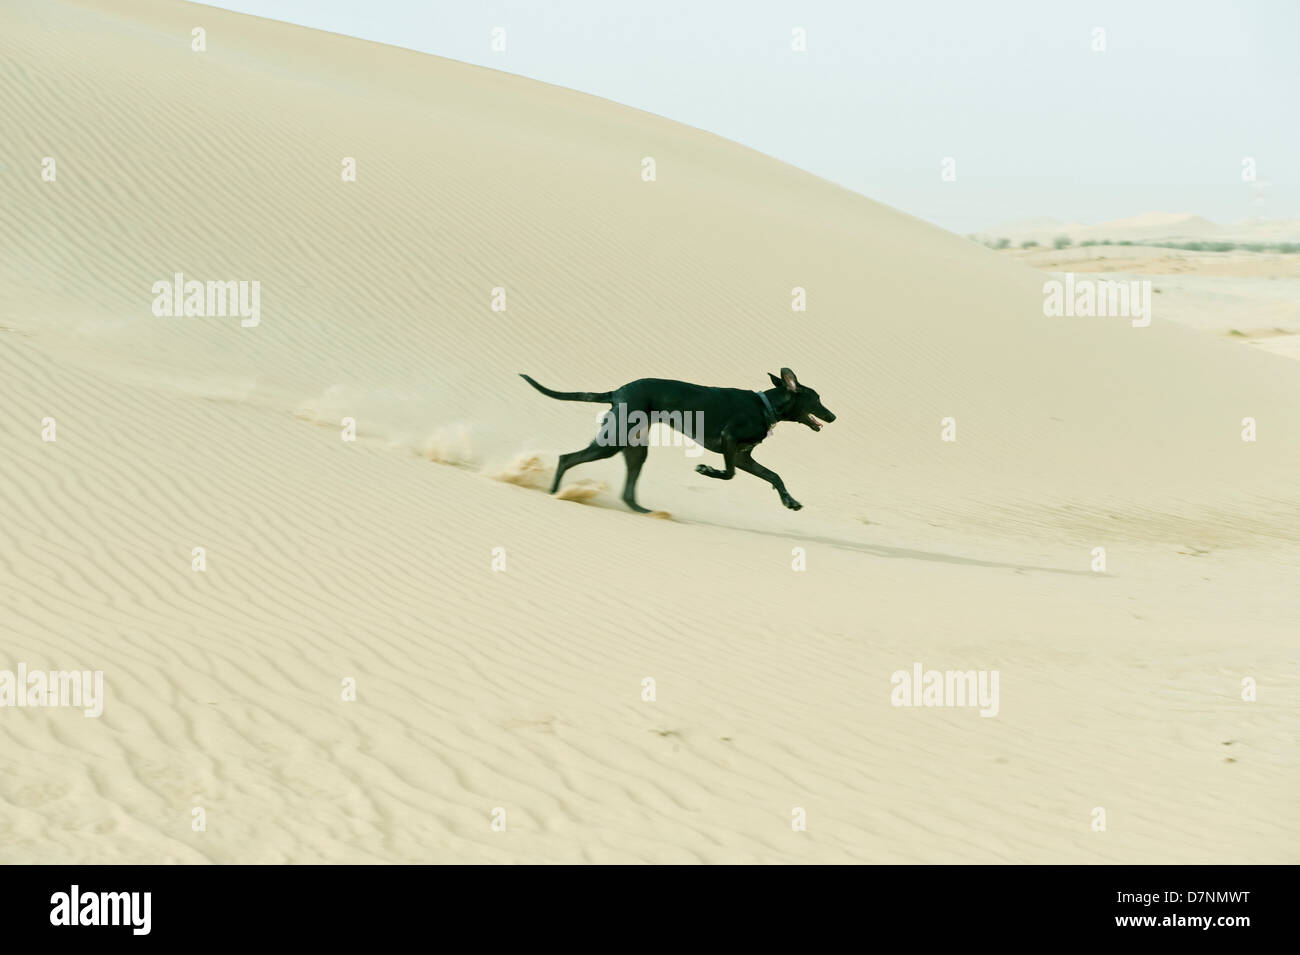 A typical 'desert dog', a black saluki cross running on sand dunes in the desert, Abu Dhabi Stock Photo